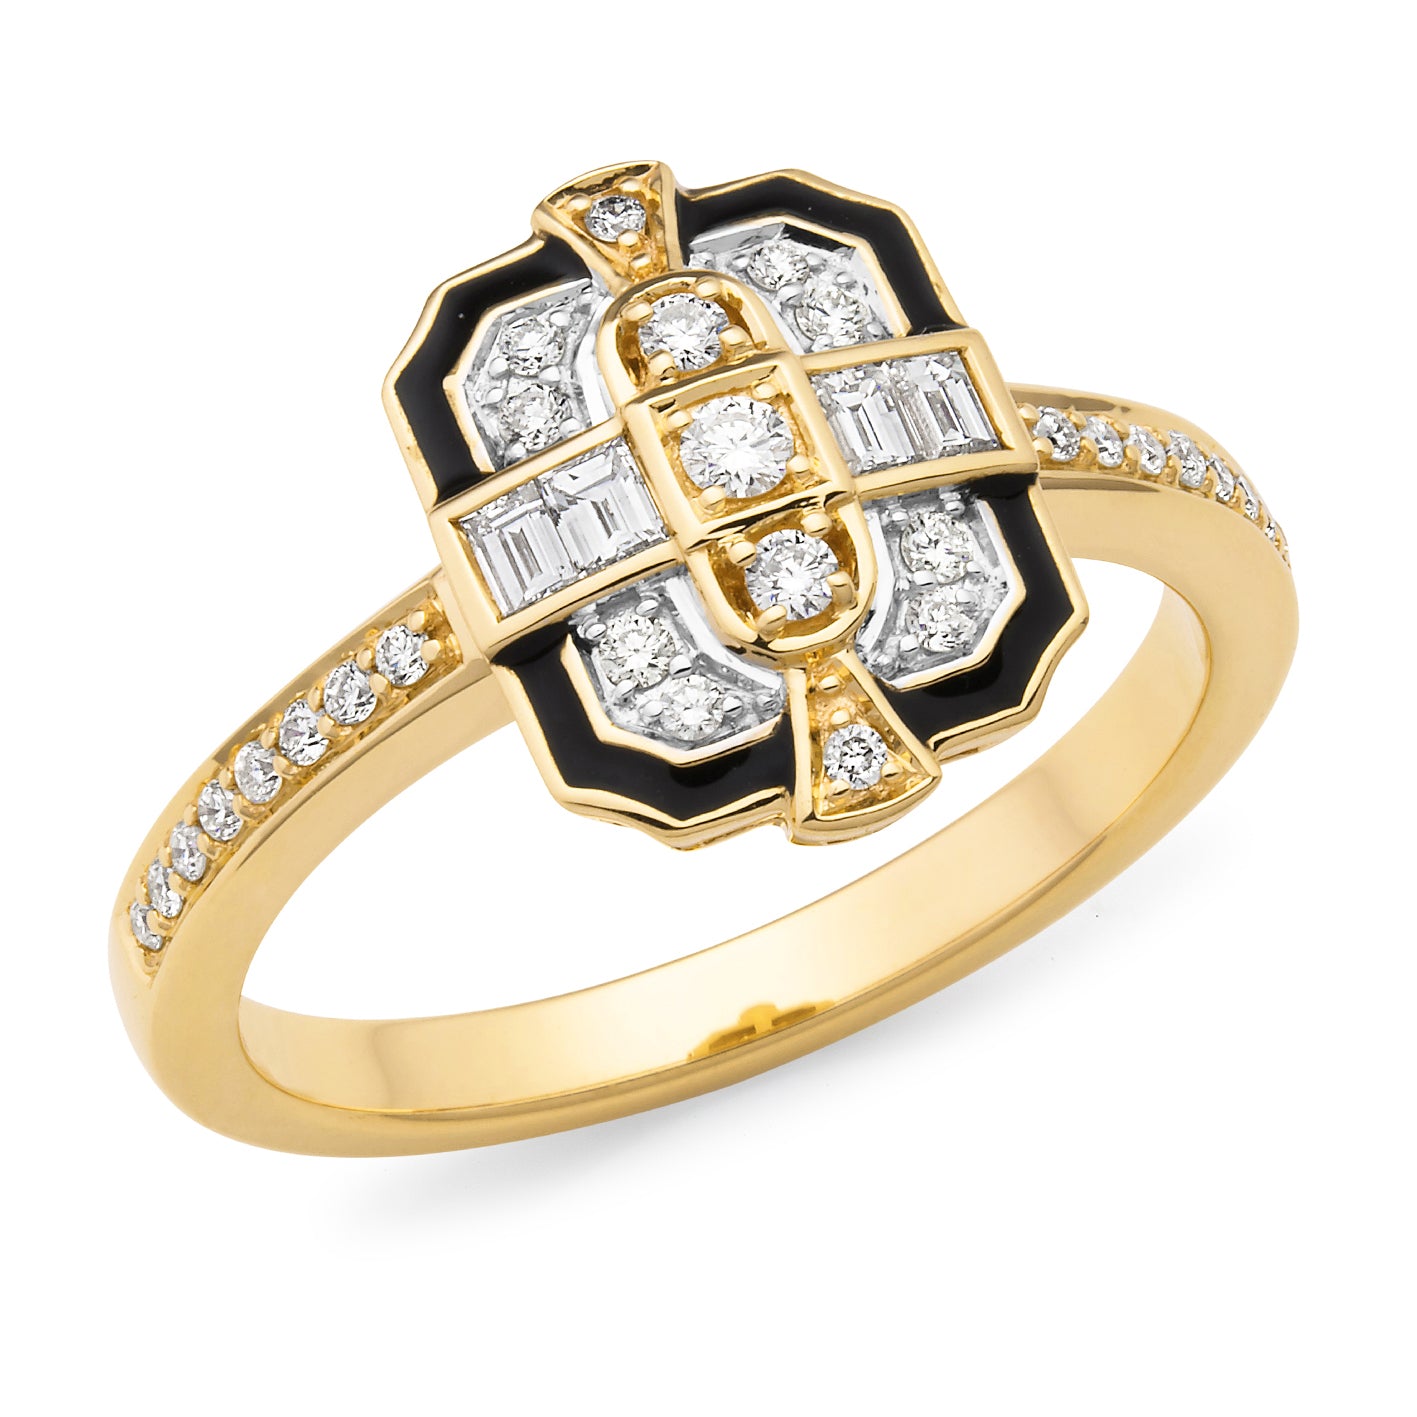 Aurora' Art Deco Style Diamond Ring in 9ct Yellow gold